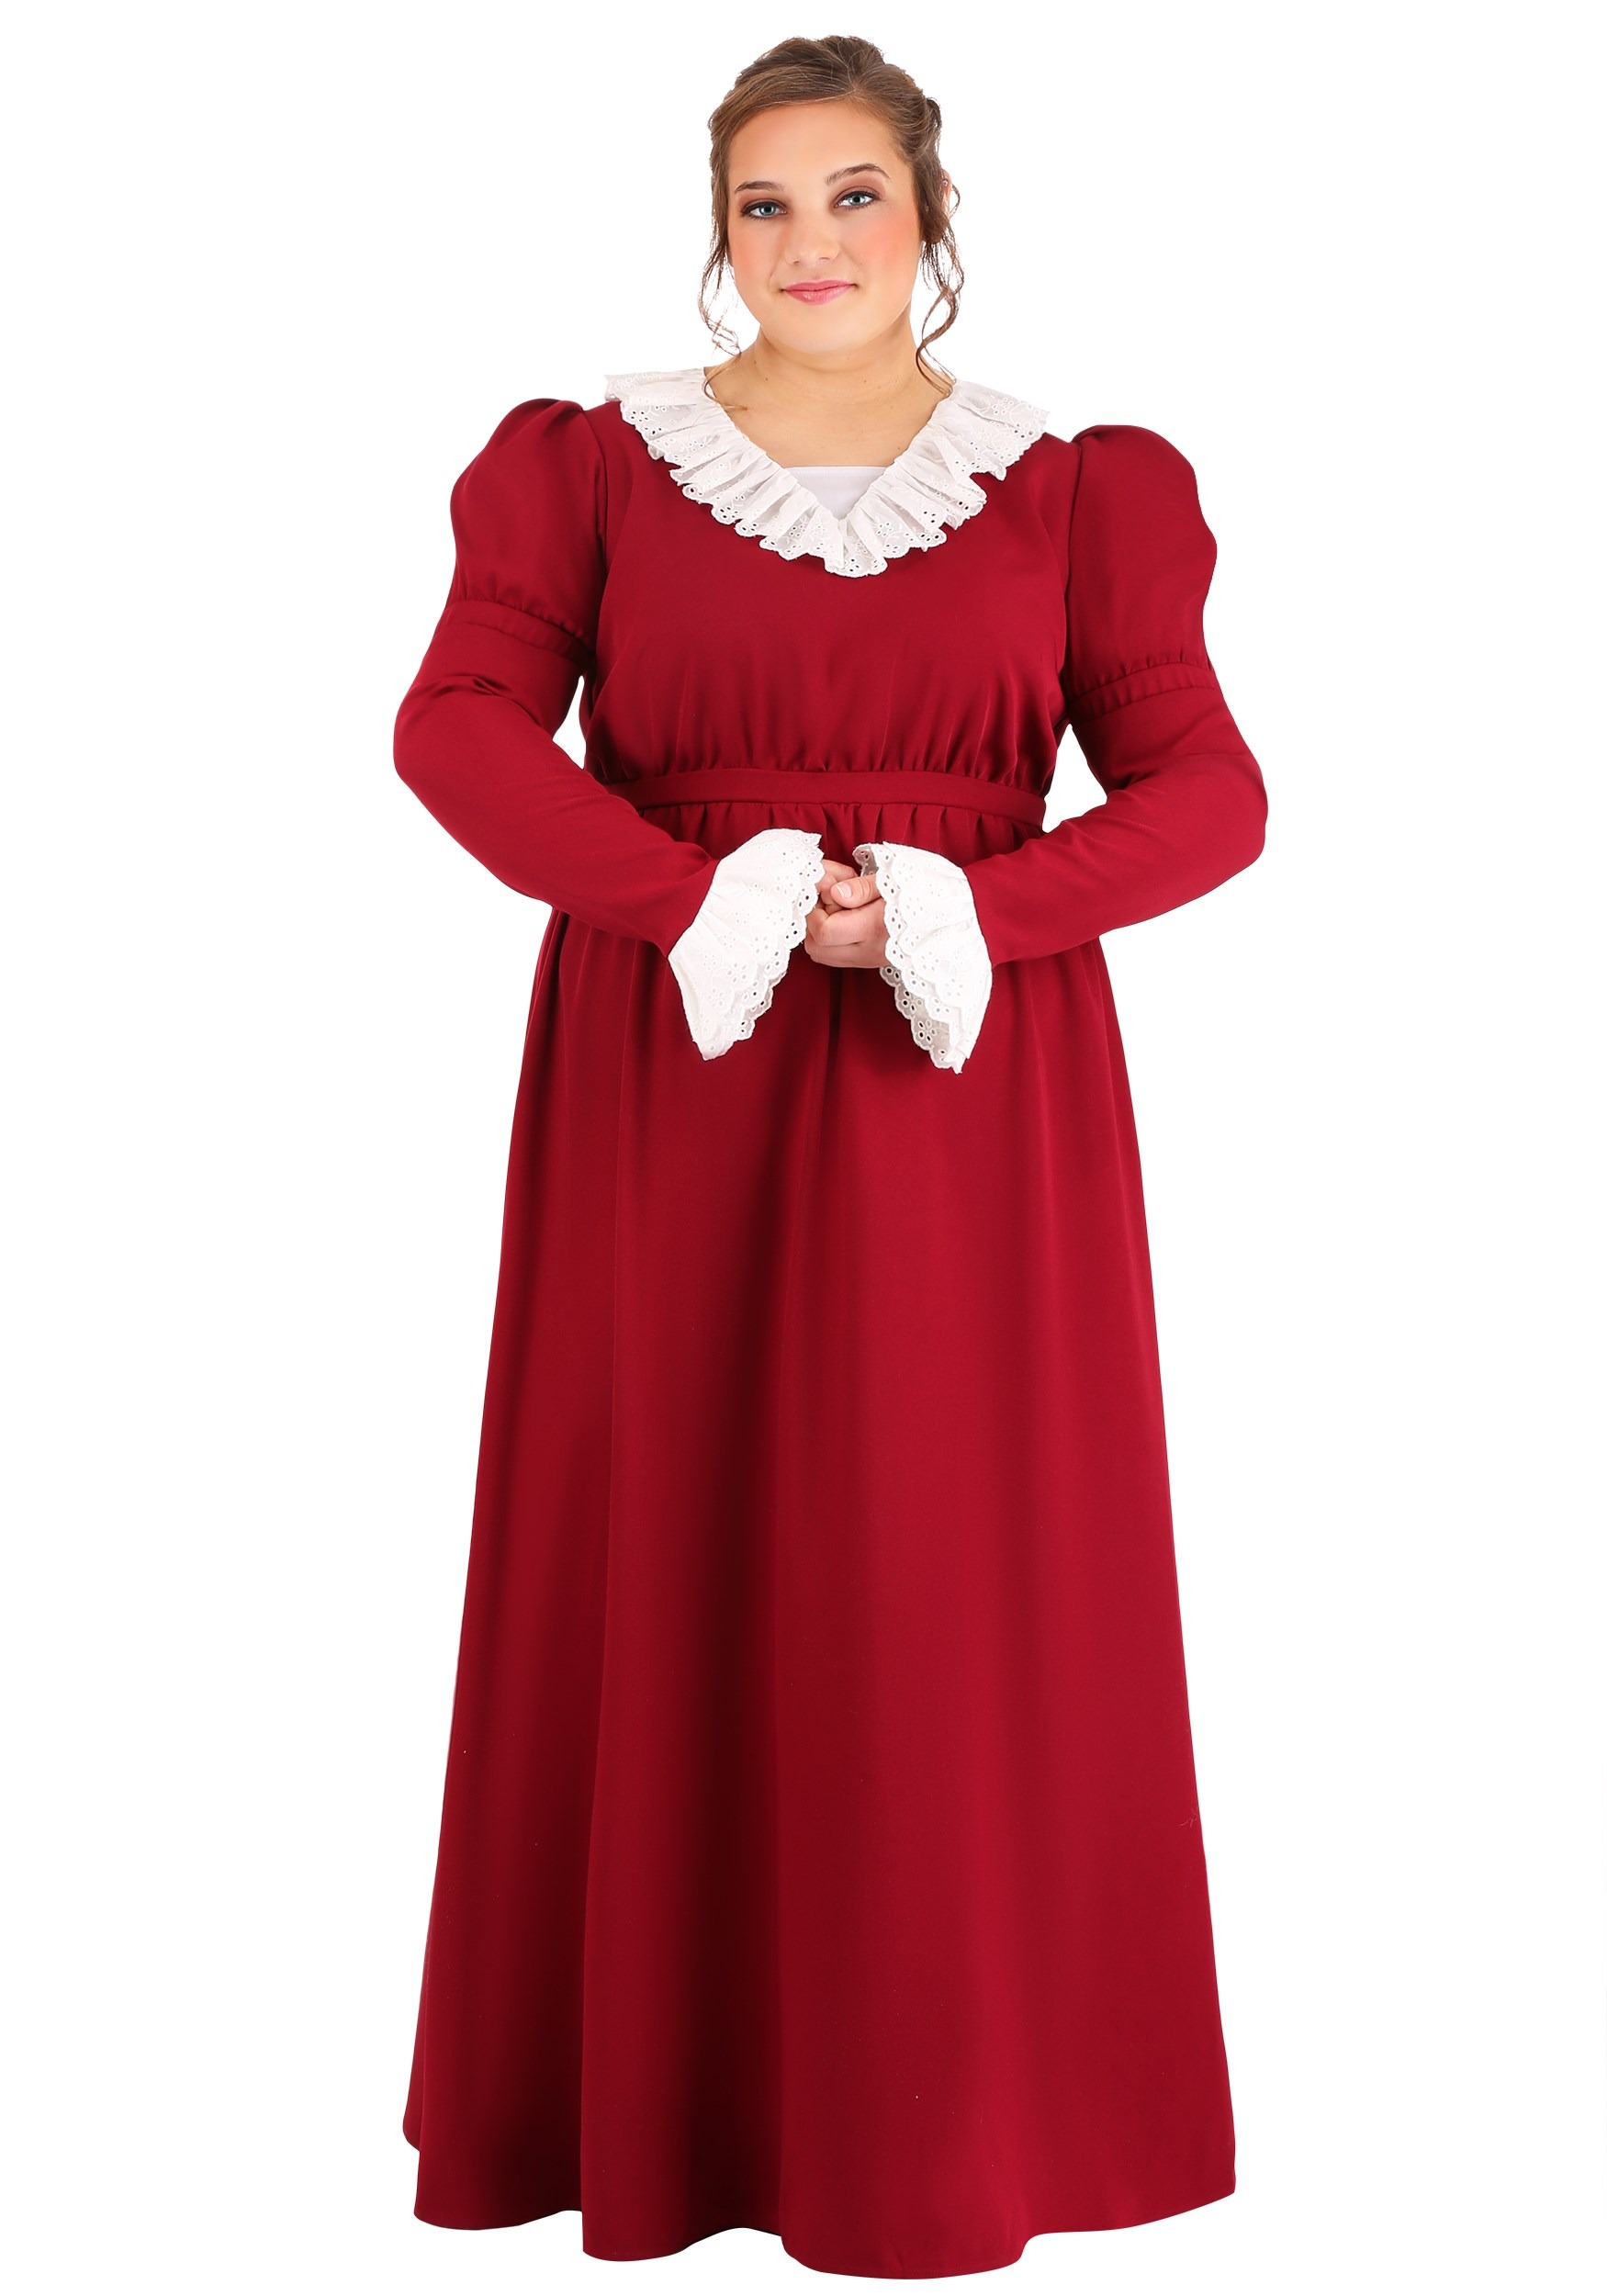 Plus Size Abigail Adams Costume for Women